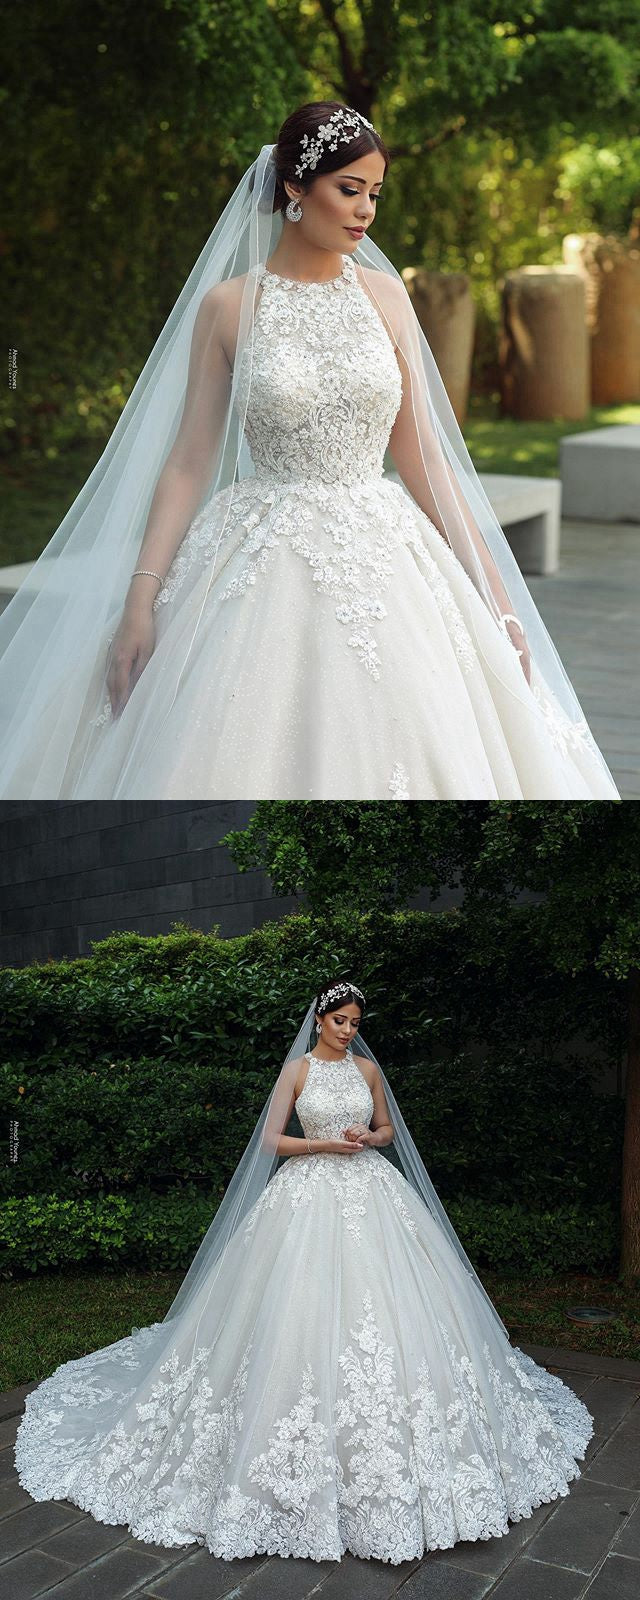 Princess Wedding Dress Halter Neckline, Dresses For Wedding, Bridal Gown ,Bride Dress, Dresses For Brides